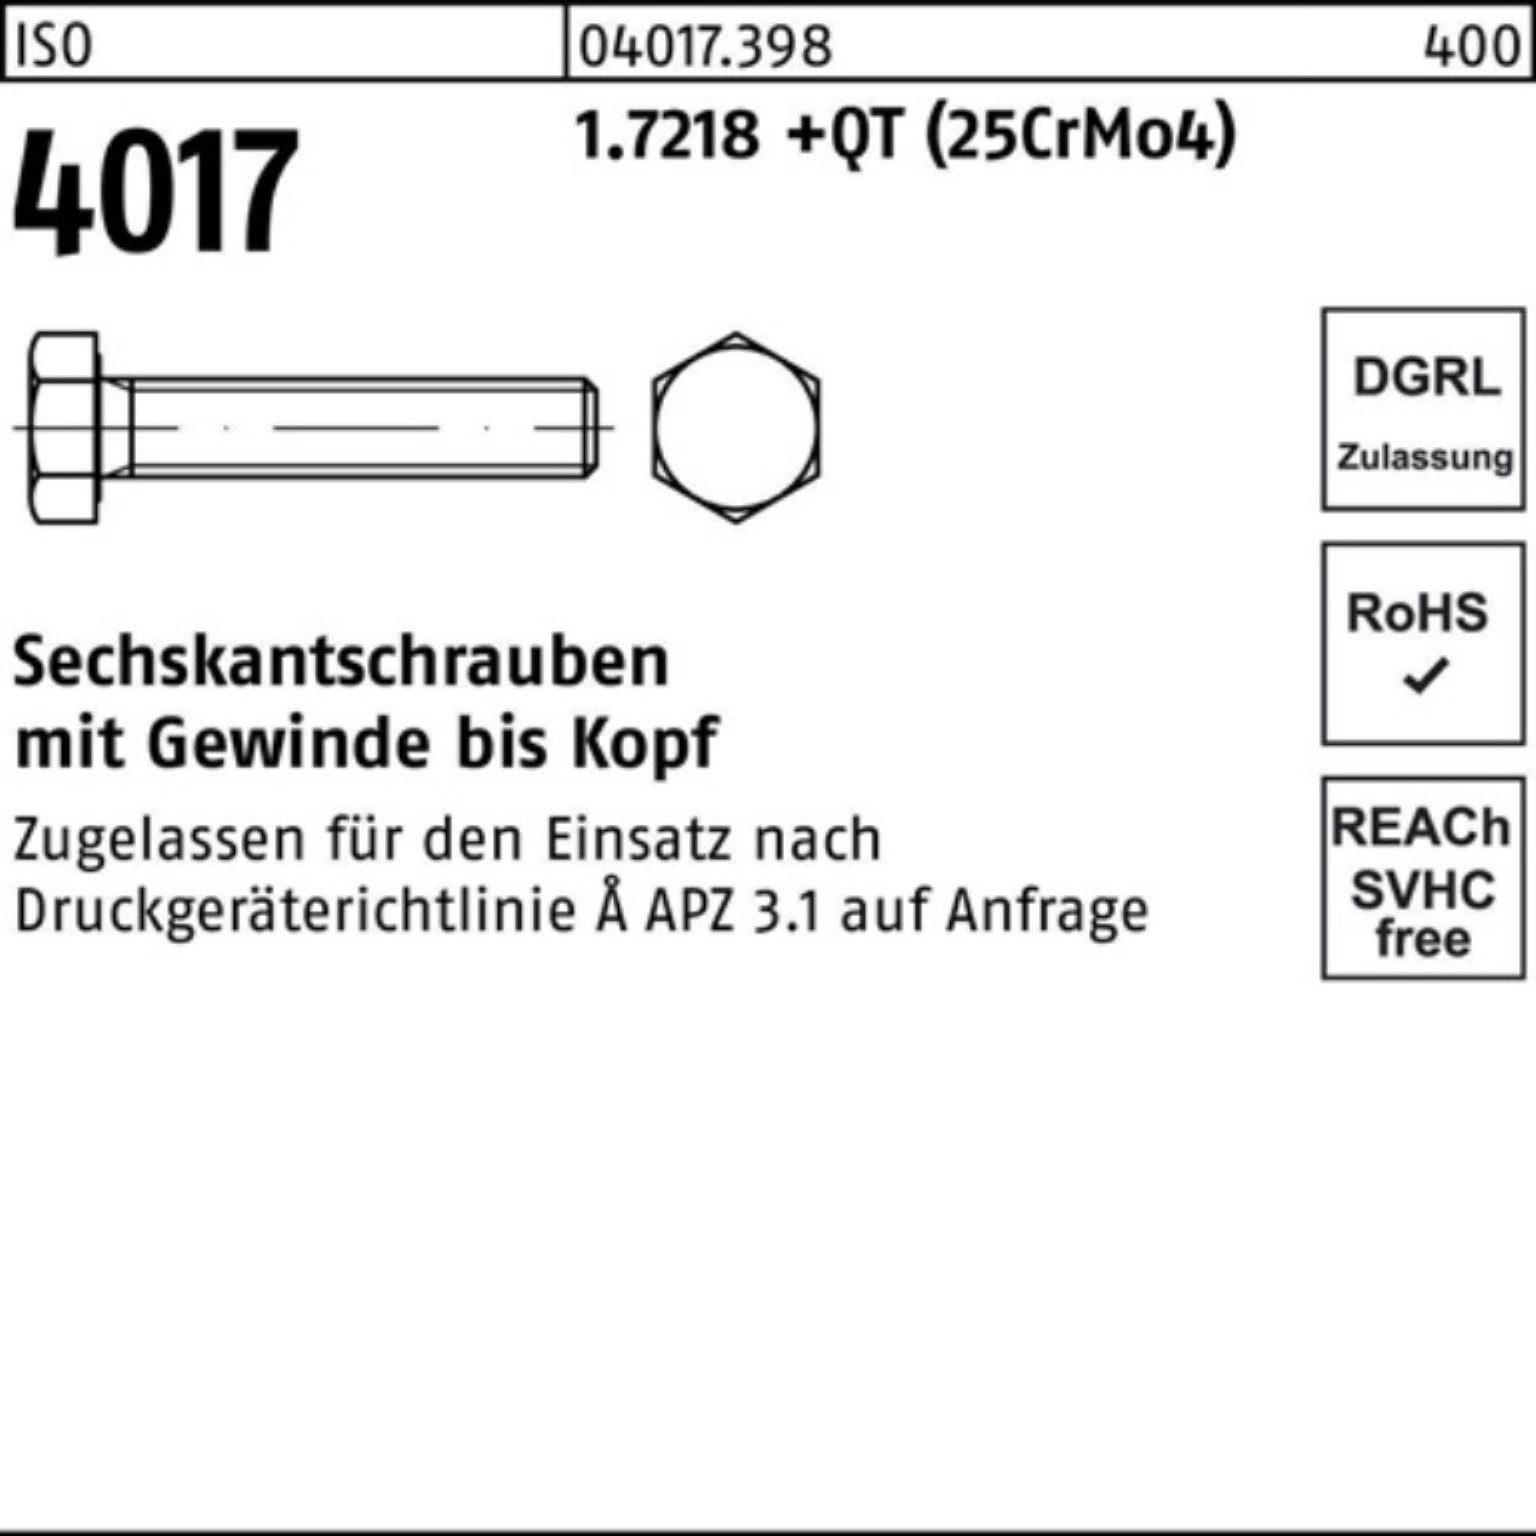 +QT Sechskantschraube 100er Bufab VG ISO (25CrMo4) Sechskantschraube 90 1.7218 Pack 4017 M20x